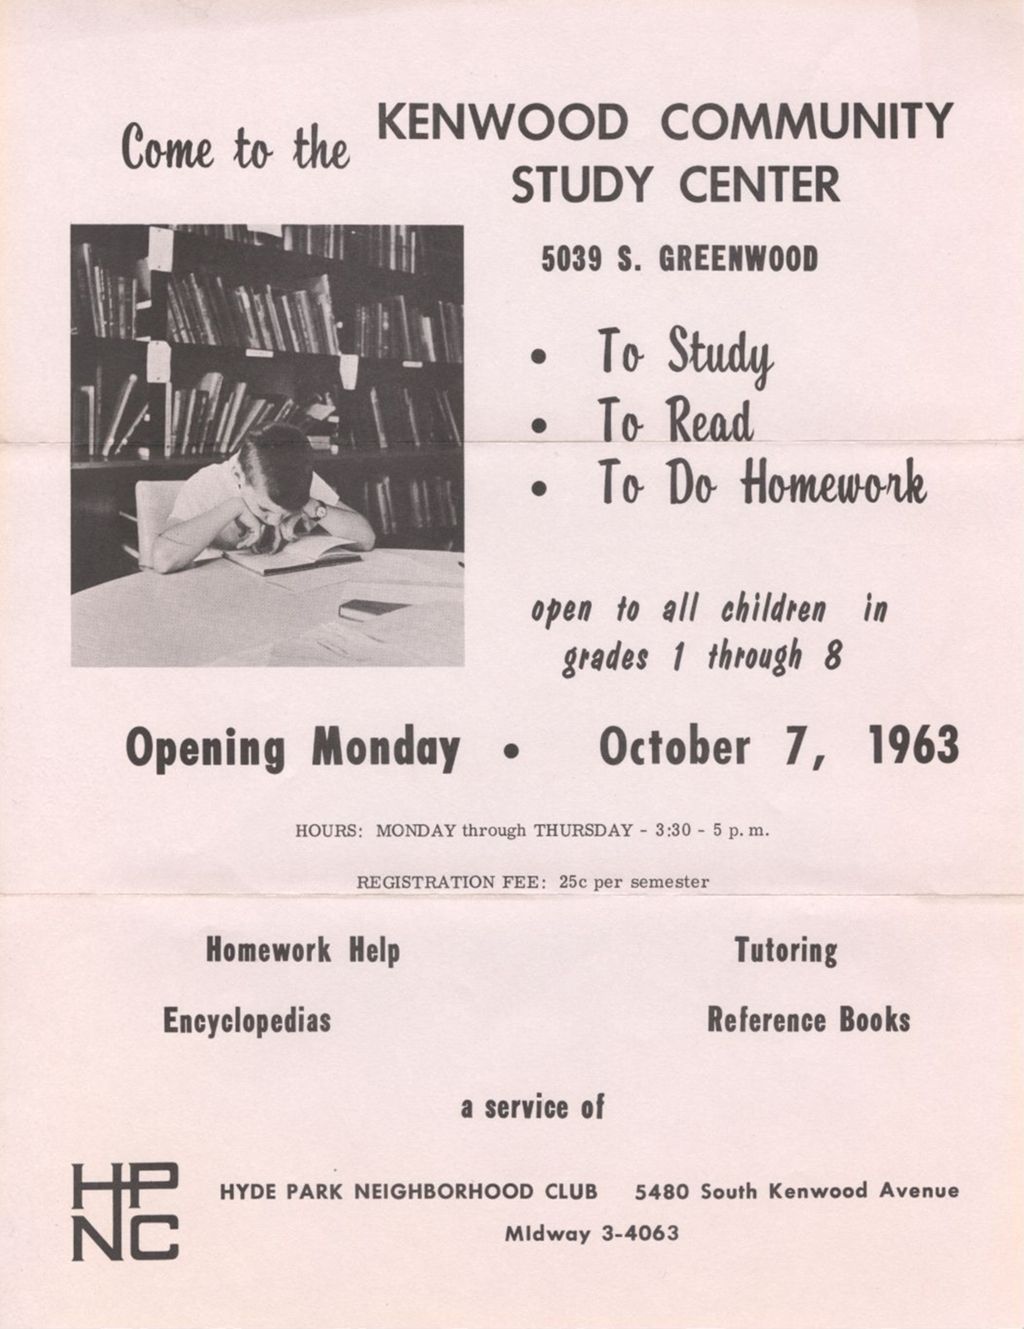 Miniature of Kenwood Community Study Center flyer